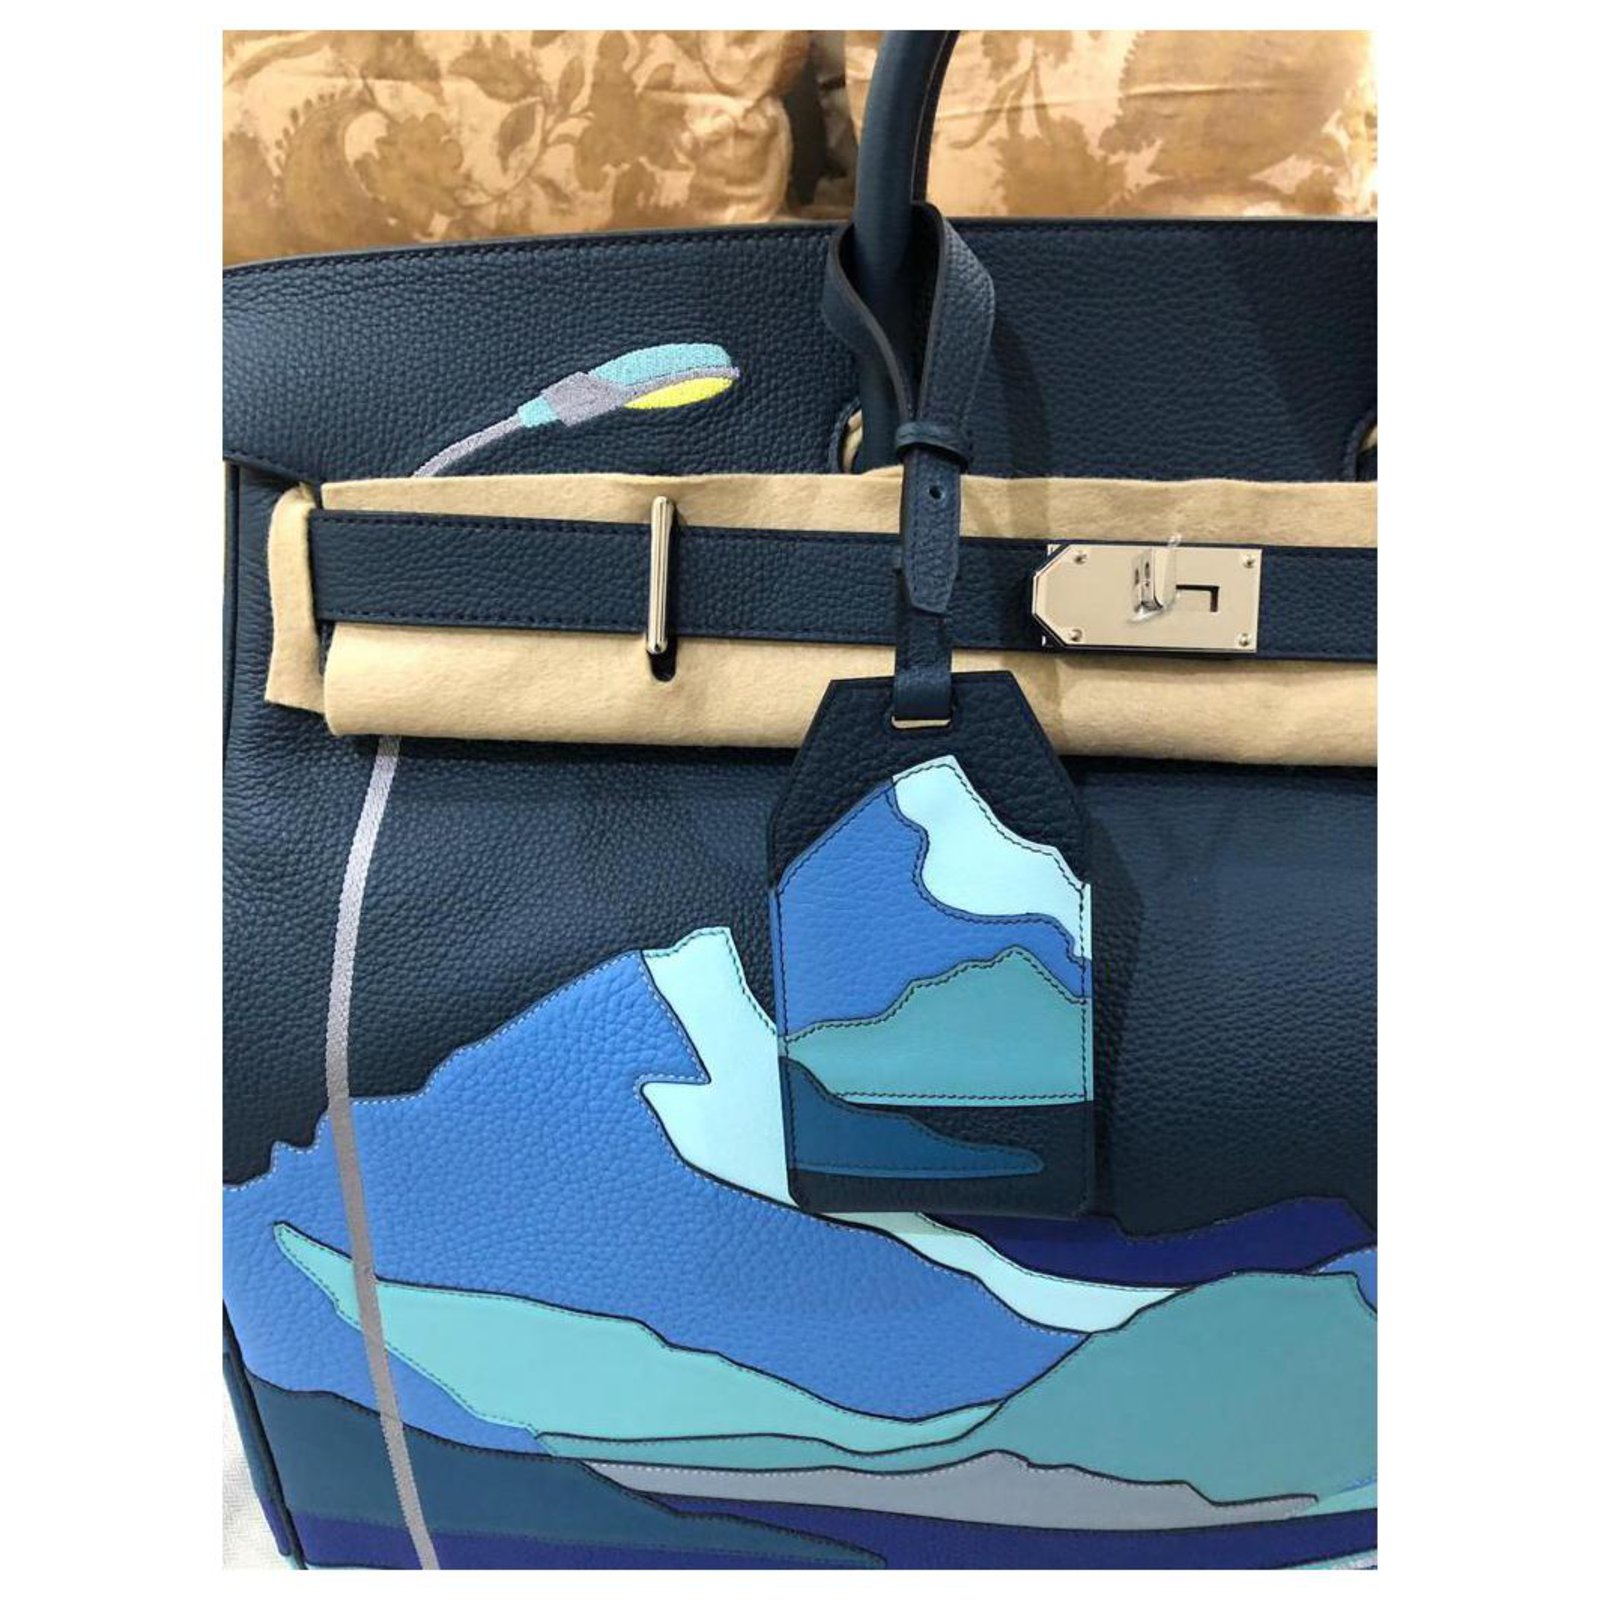 HoooGoods on X: Here are some detail pics of Birkin HAC 50 PHW. Have a  good day. SHOP:  #hermesBirkin #hermesbirkin50  #hermesbirkinhac50 #birkin50 #birkinhac50 #bag #handbag #luxurybag  #luxurystyle #styleguide